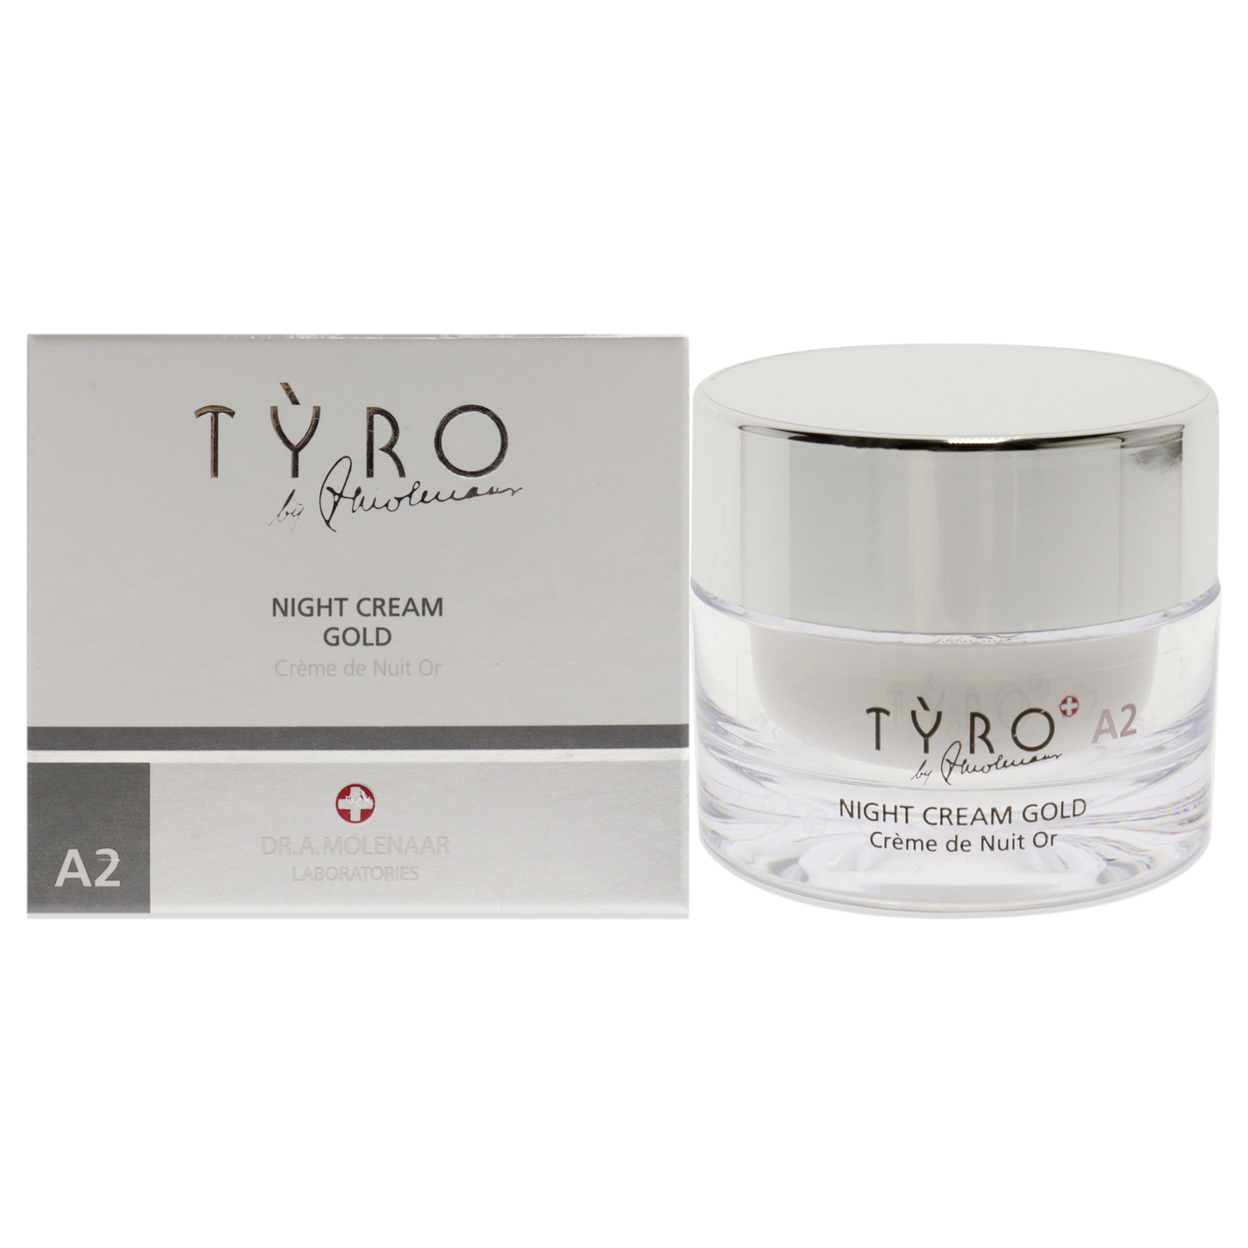 Tyro Night Cream Gold 1.69 Oz